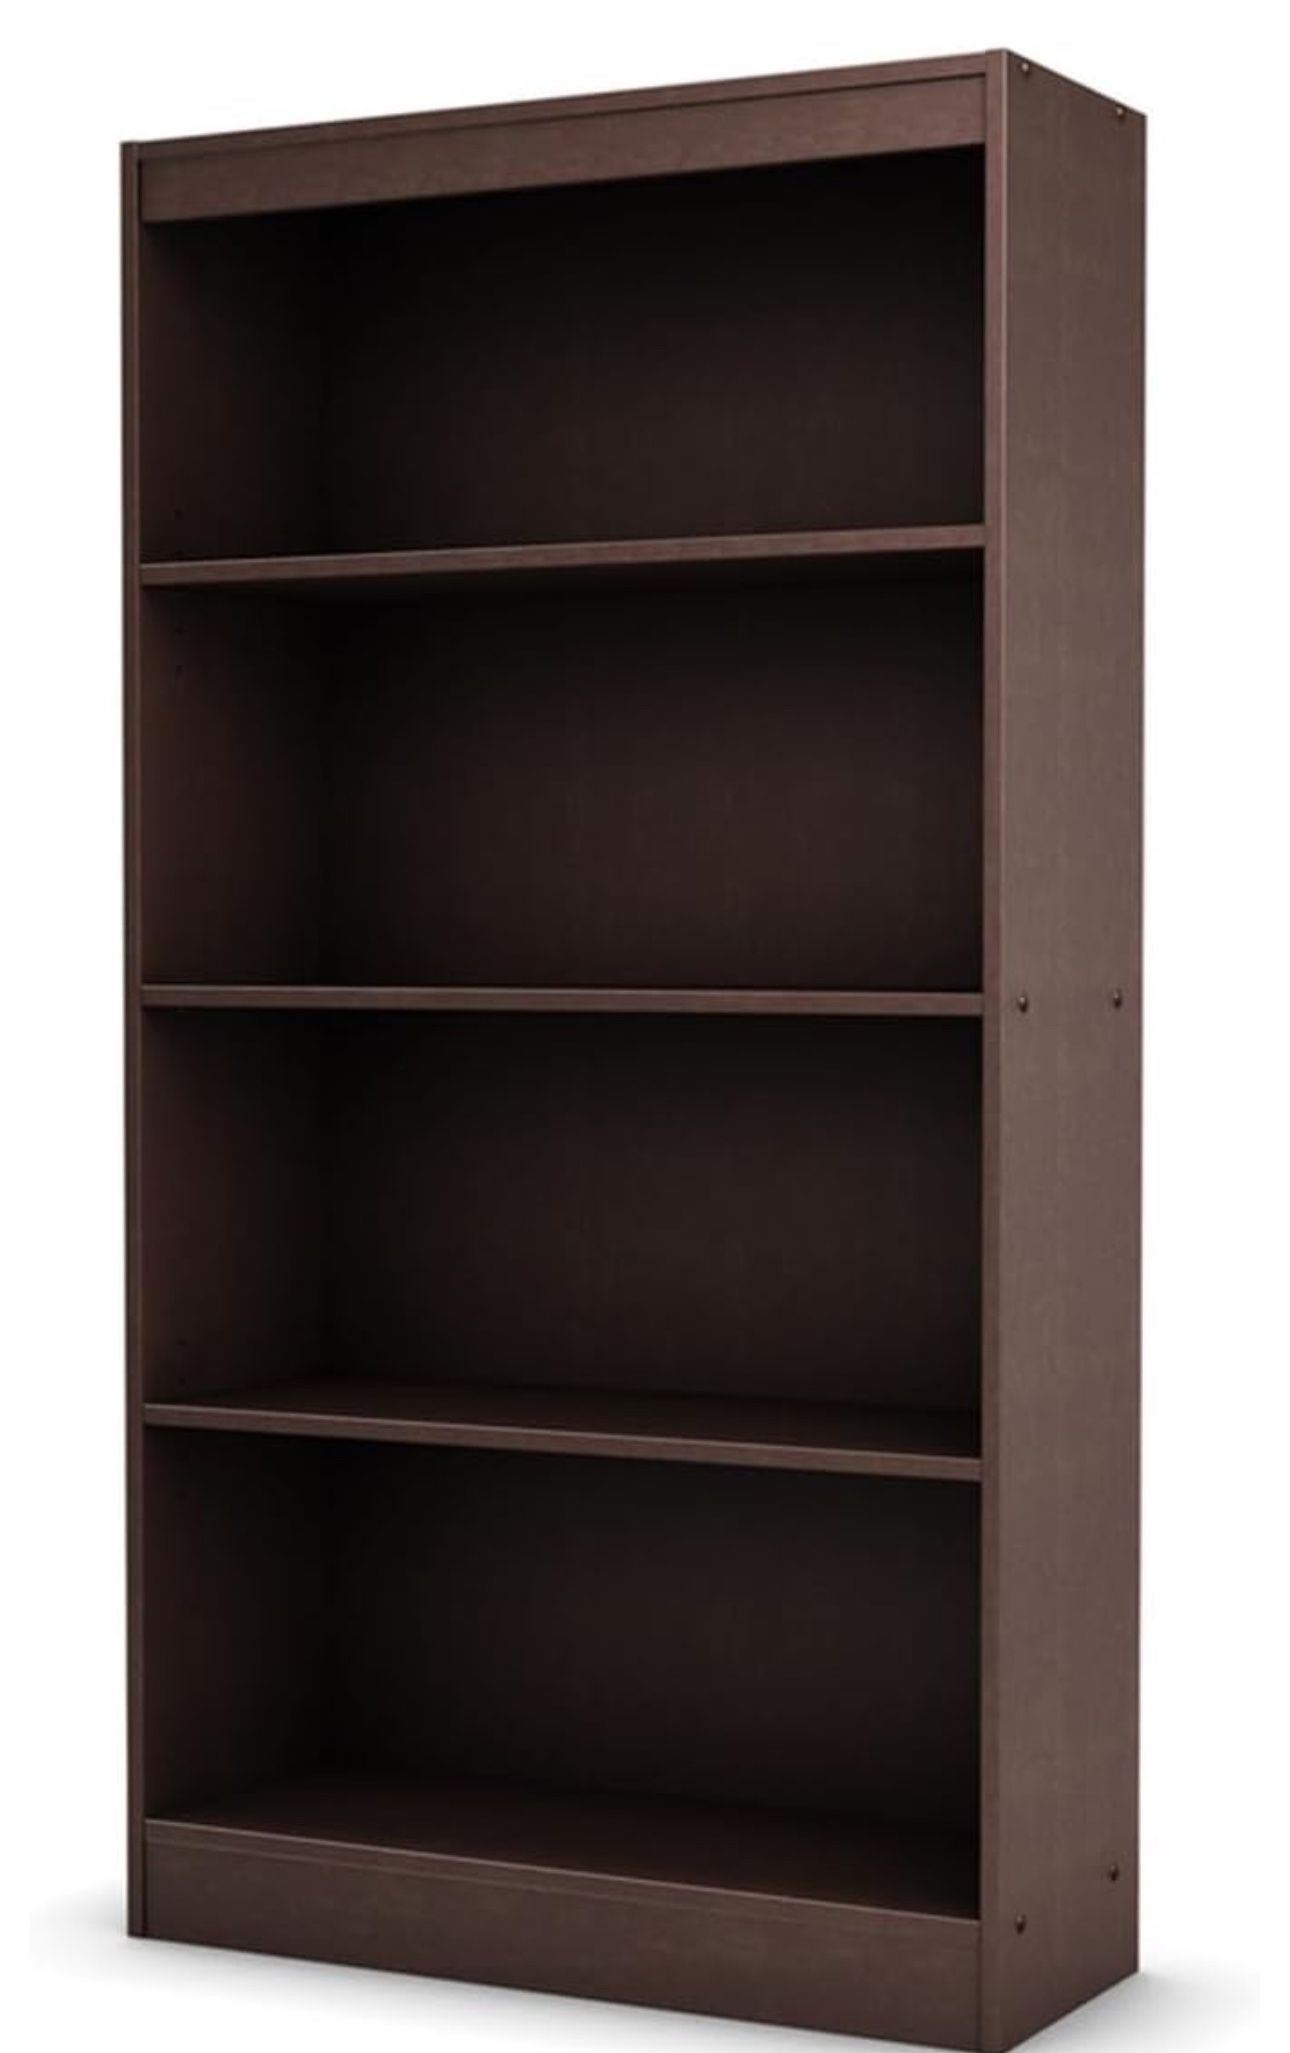 South Shore Axess 4-Shelf Bookcase-Chocolate, 58-inch